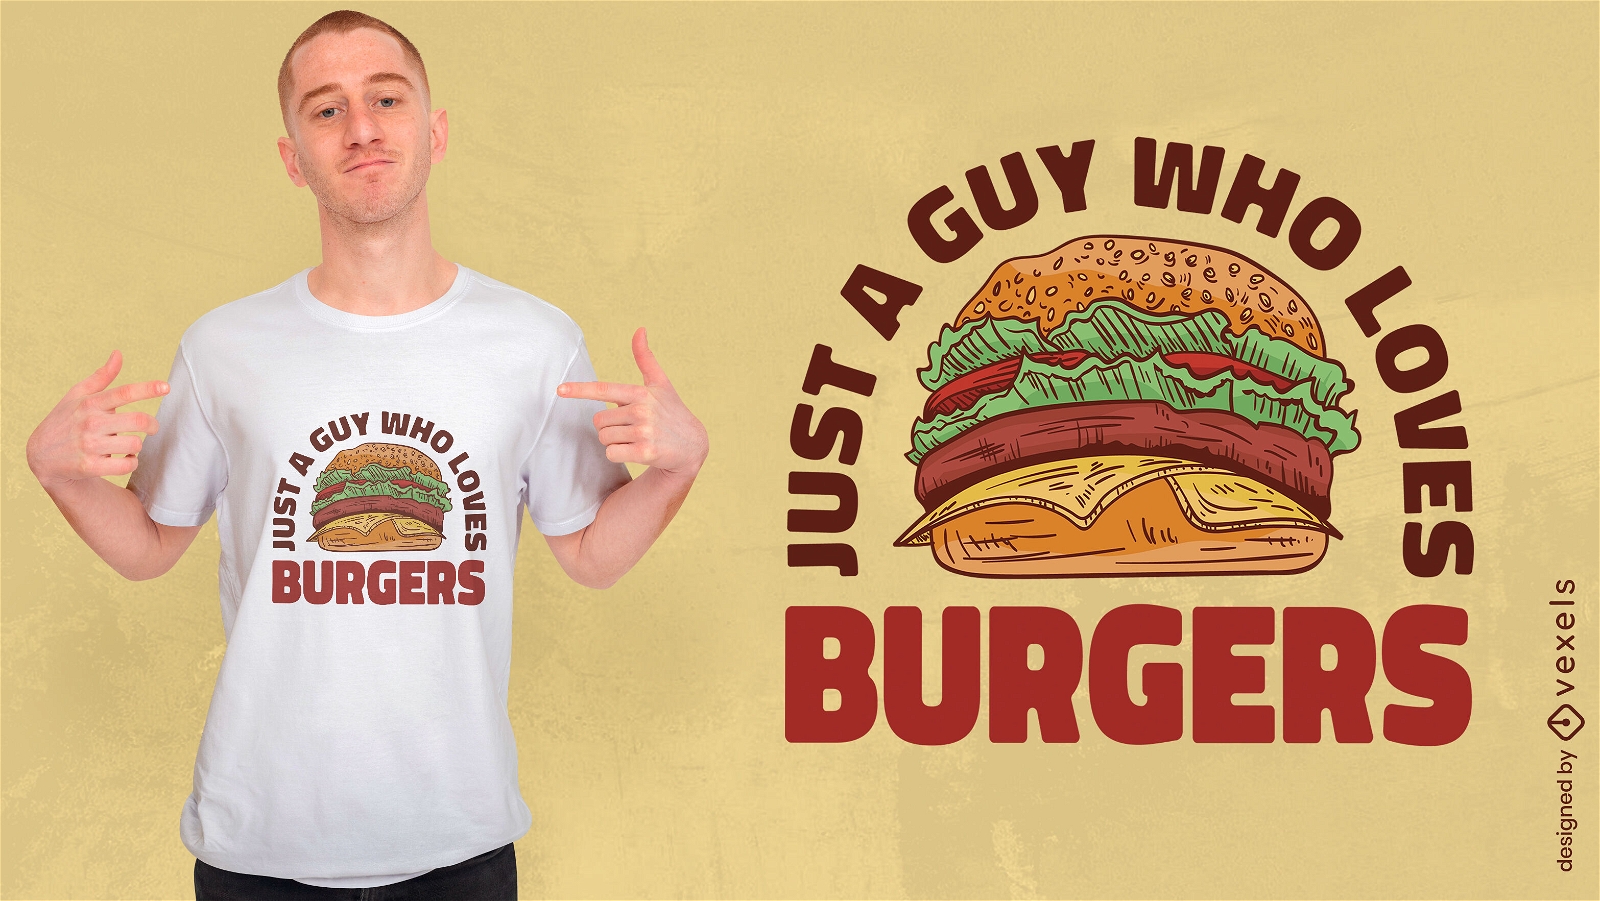 Burger love quote t-shirt design